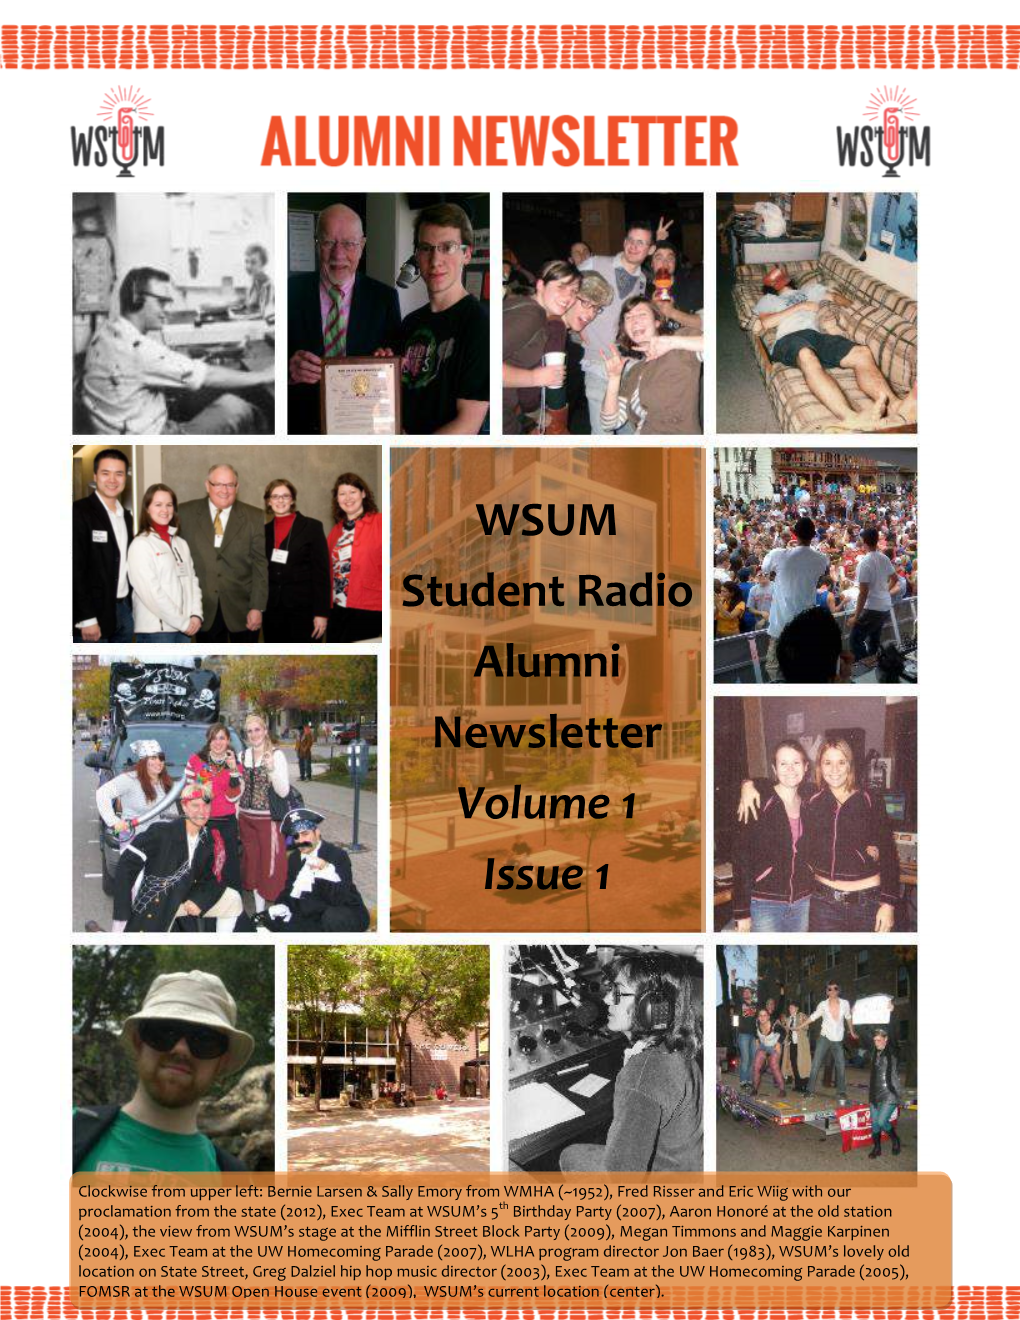 WSUM Student Radio Alumni Newsletter Volume 1 Issue 1